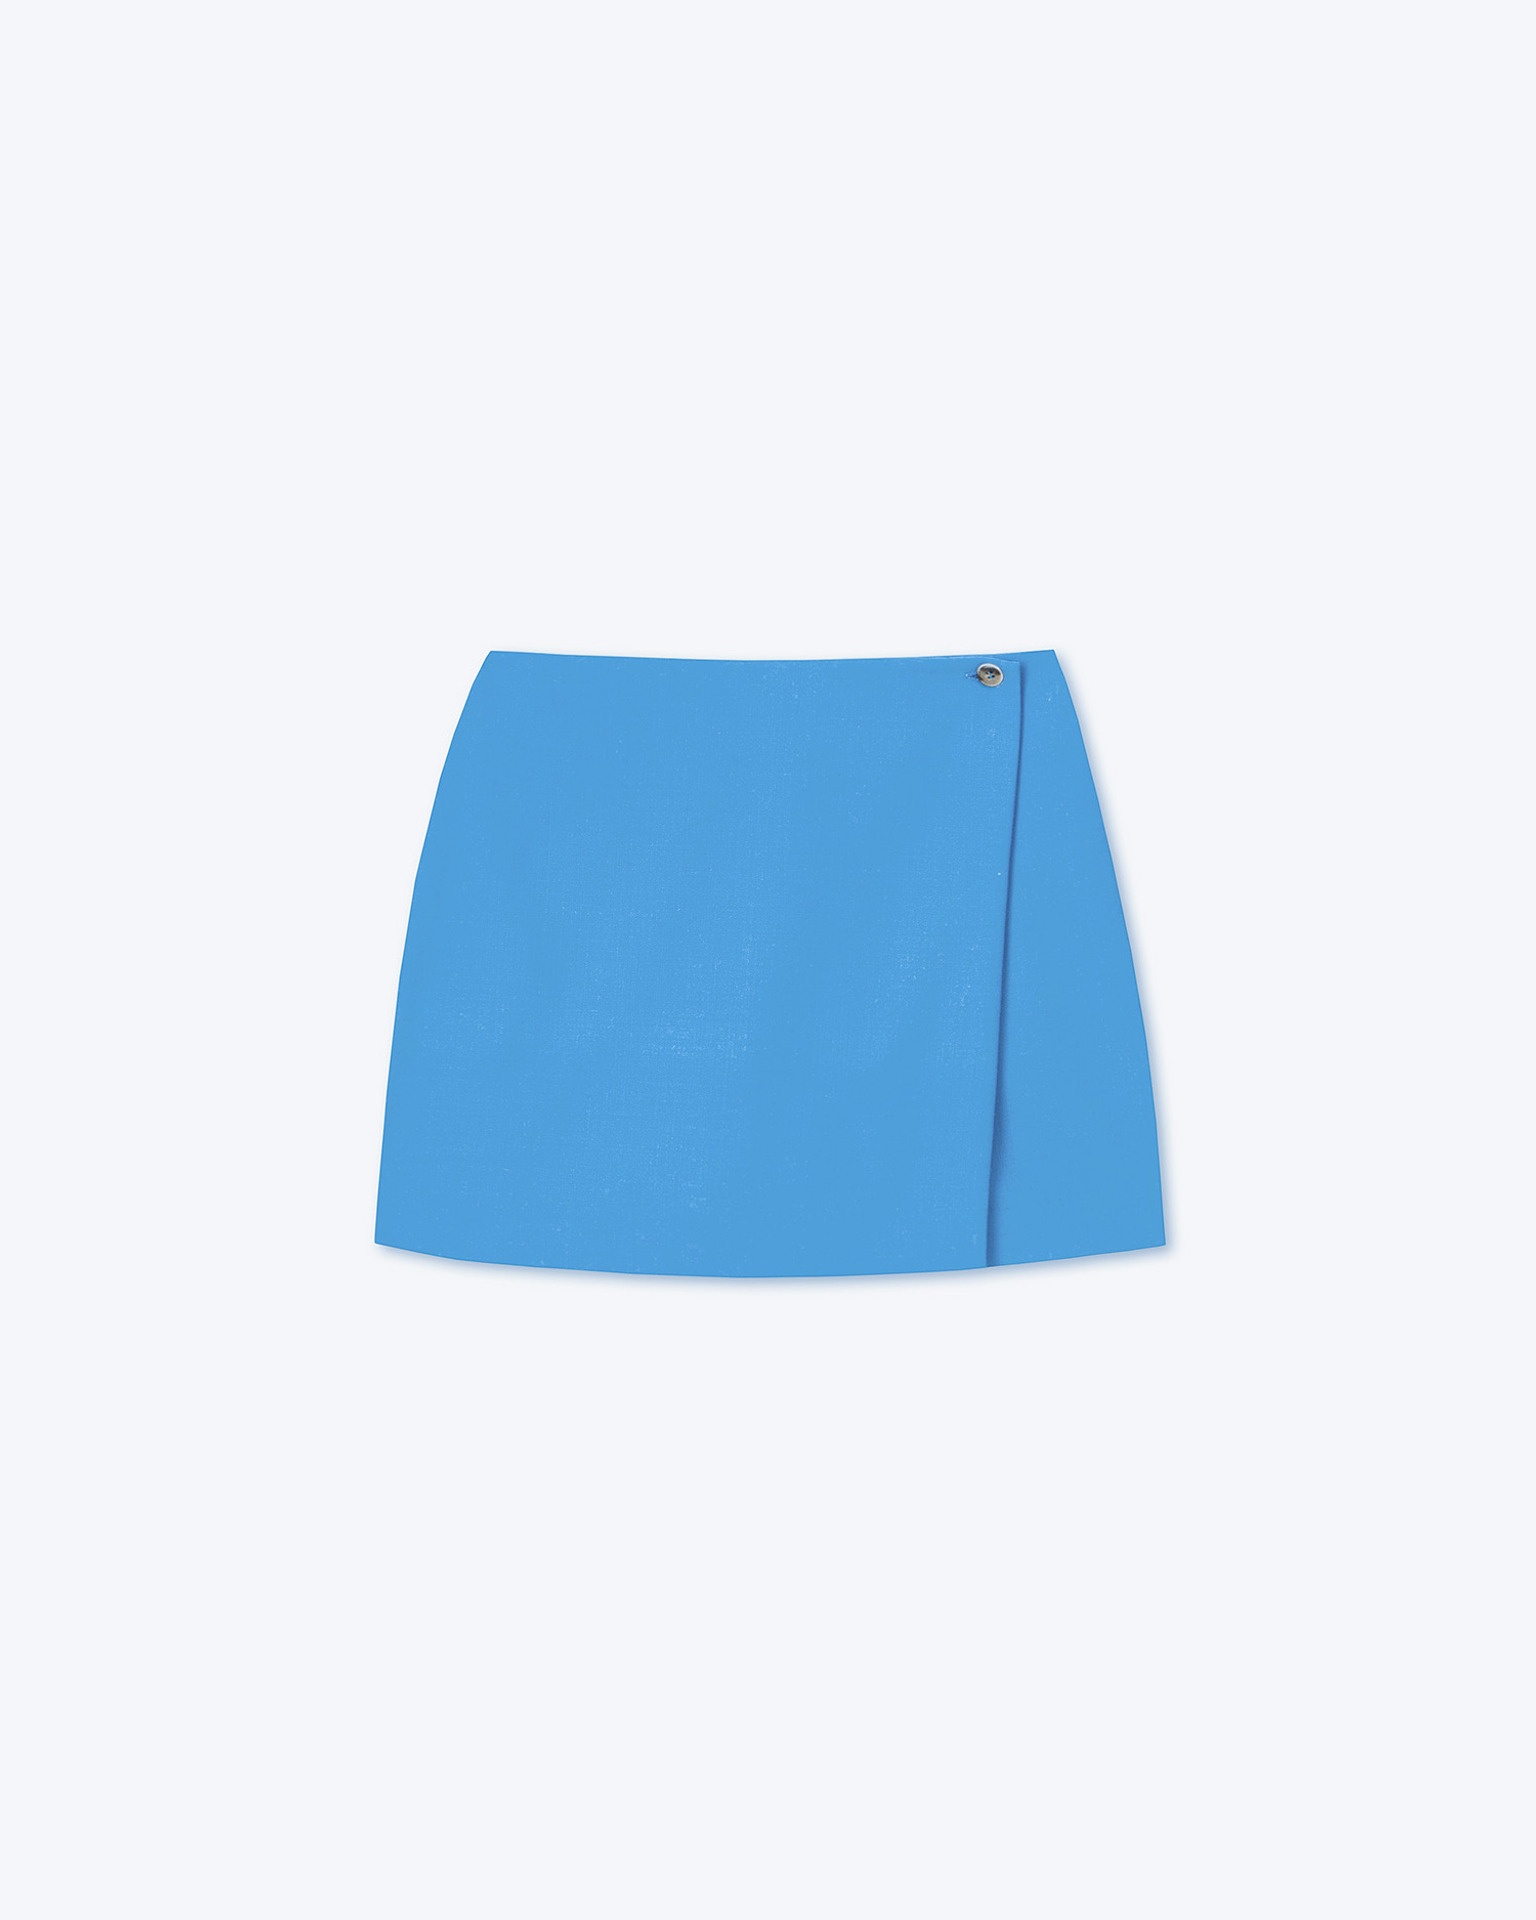 Nanushka knitted pencil skirt - Blue